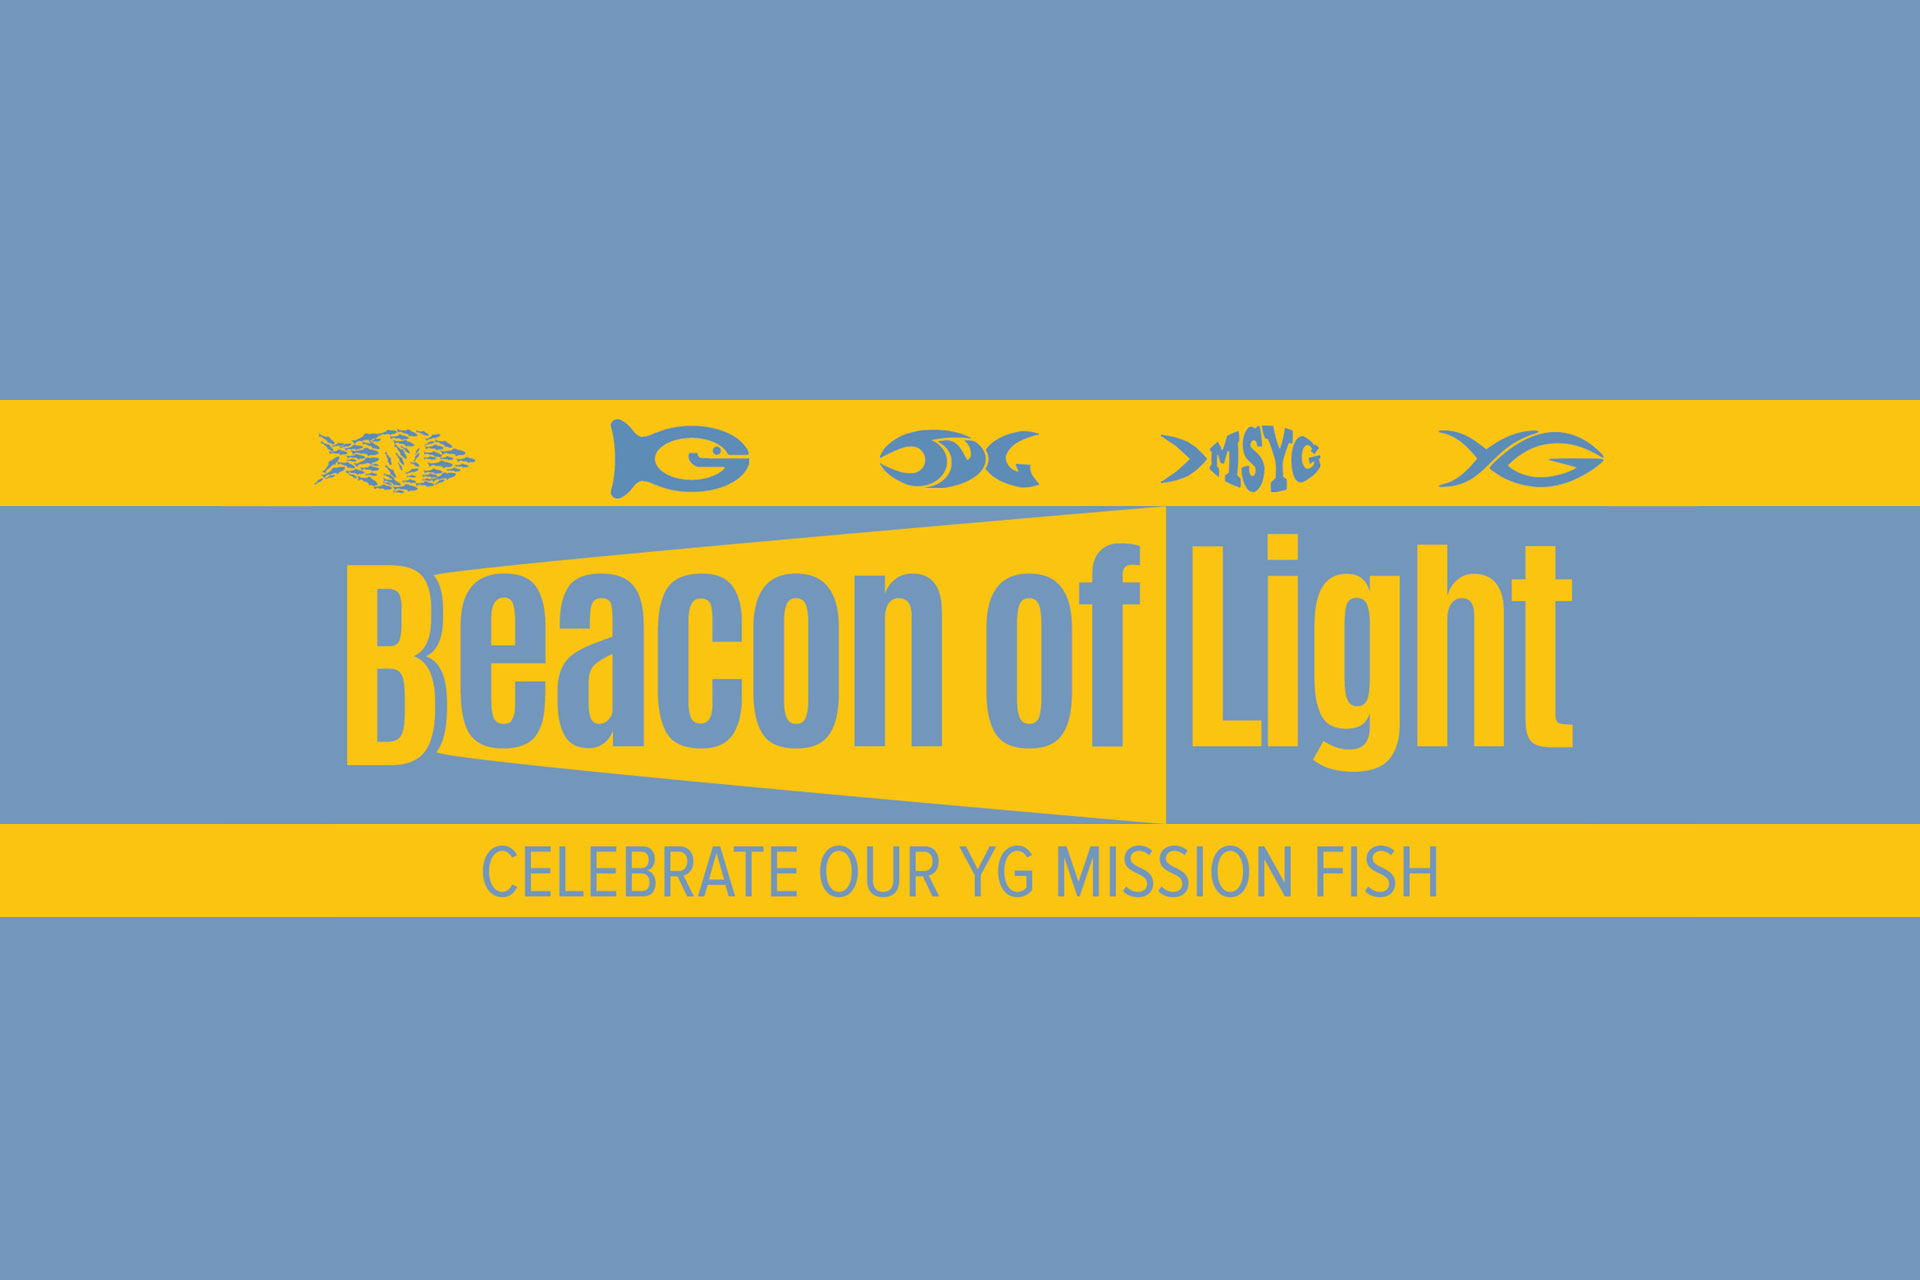 Beacon of Light